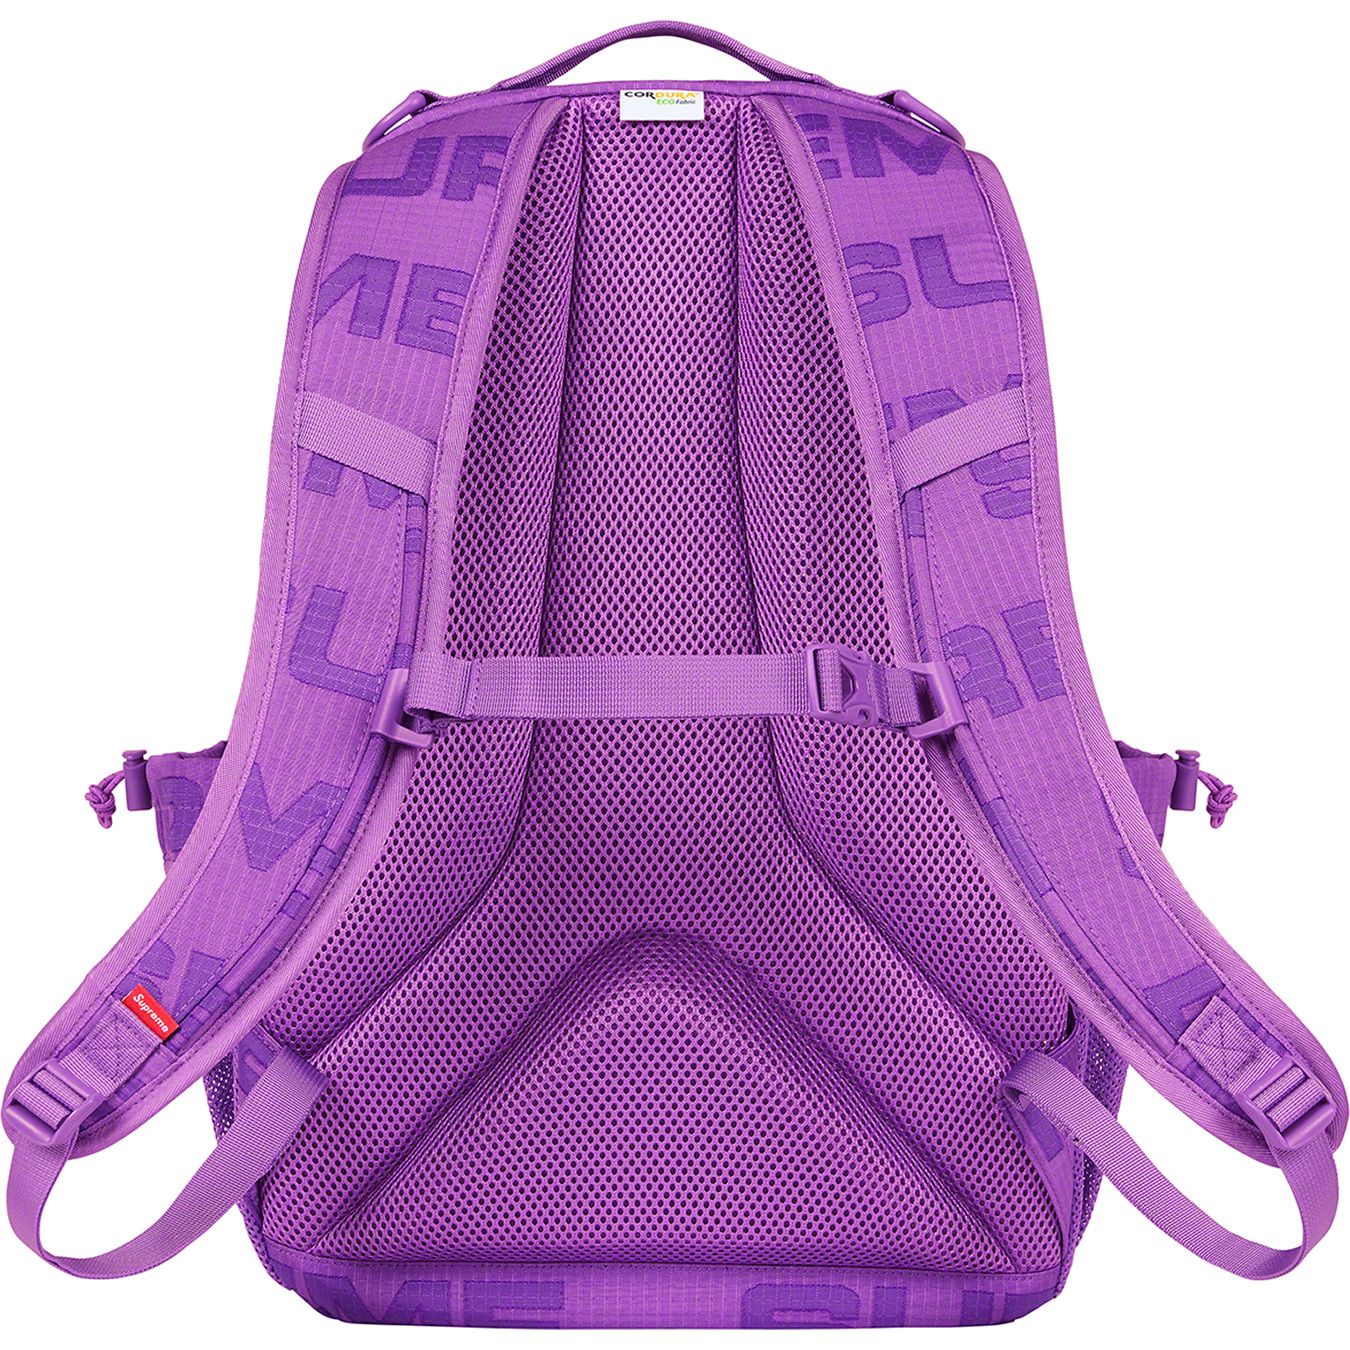  Supreme Backpack FW21 - Purple 